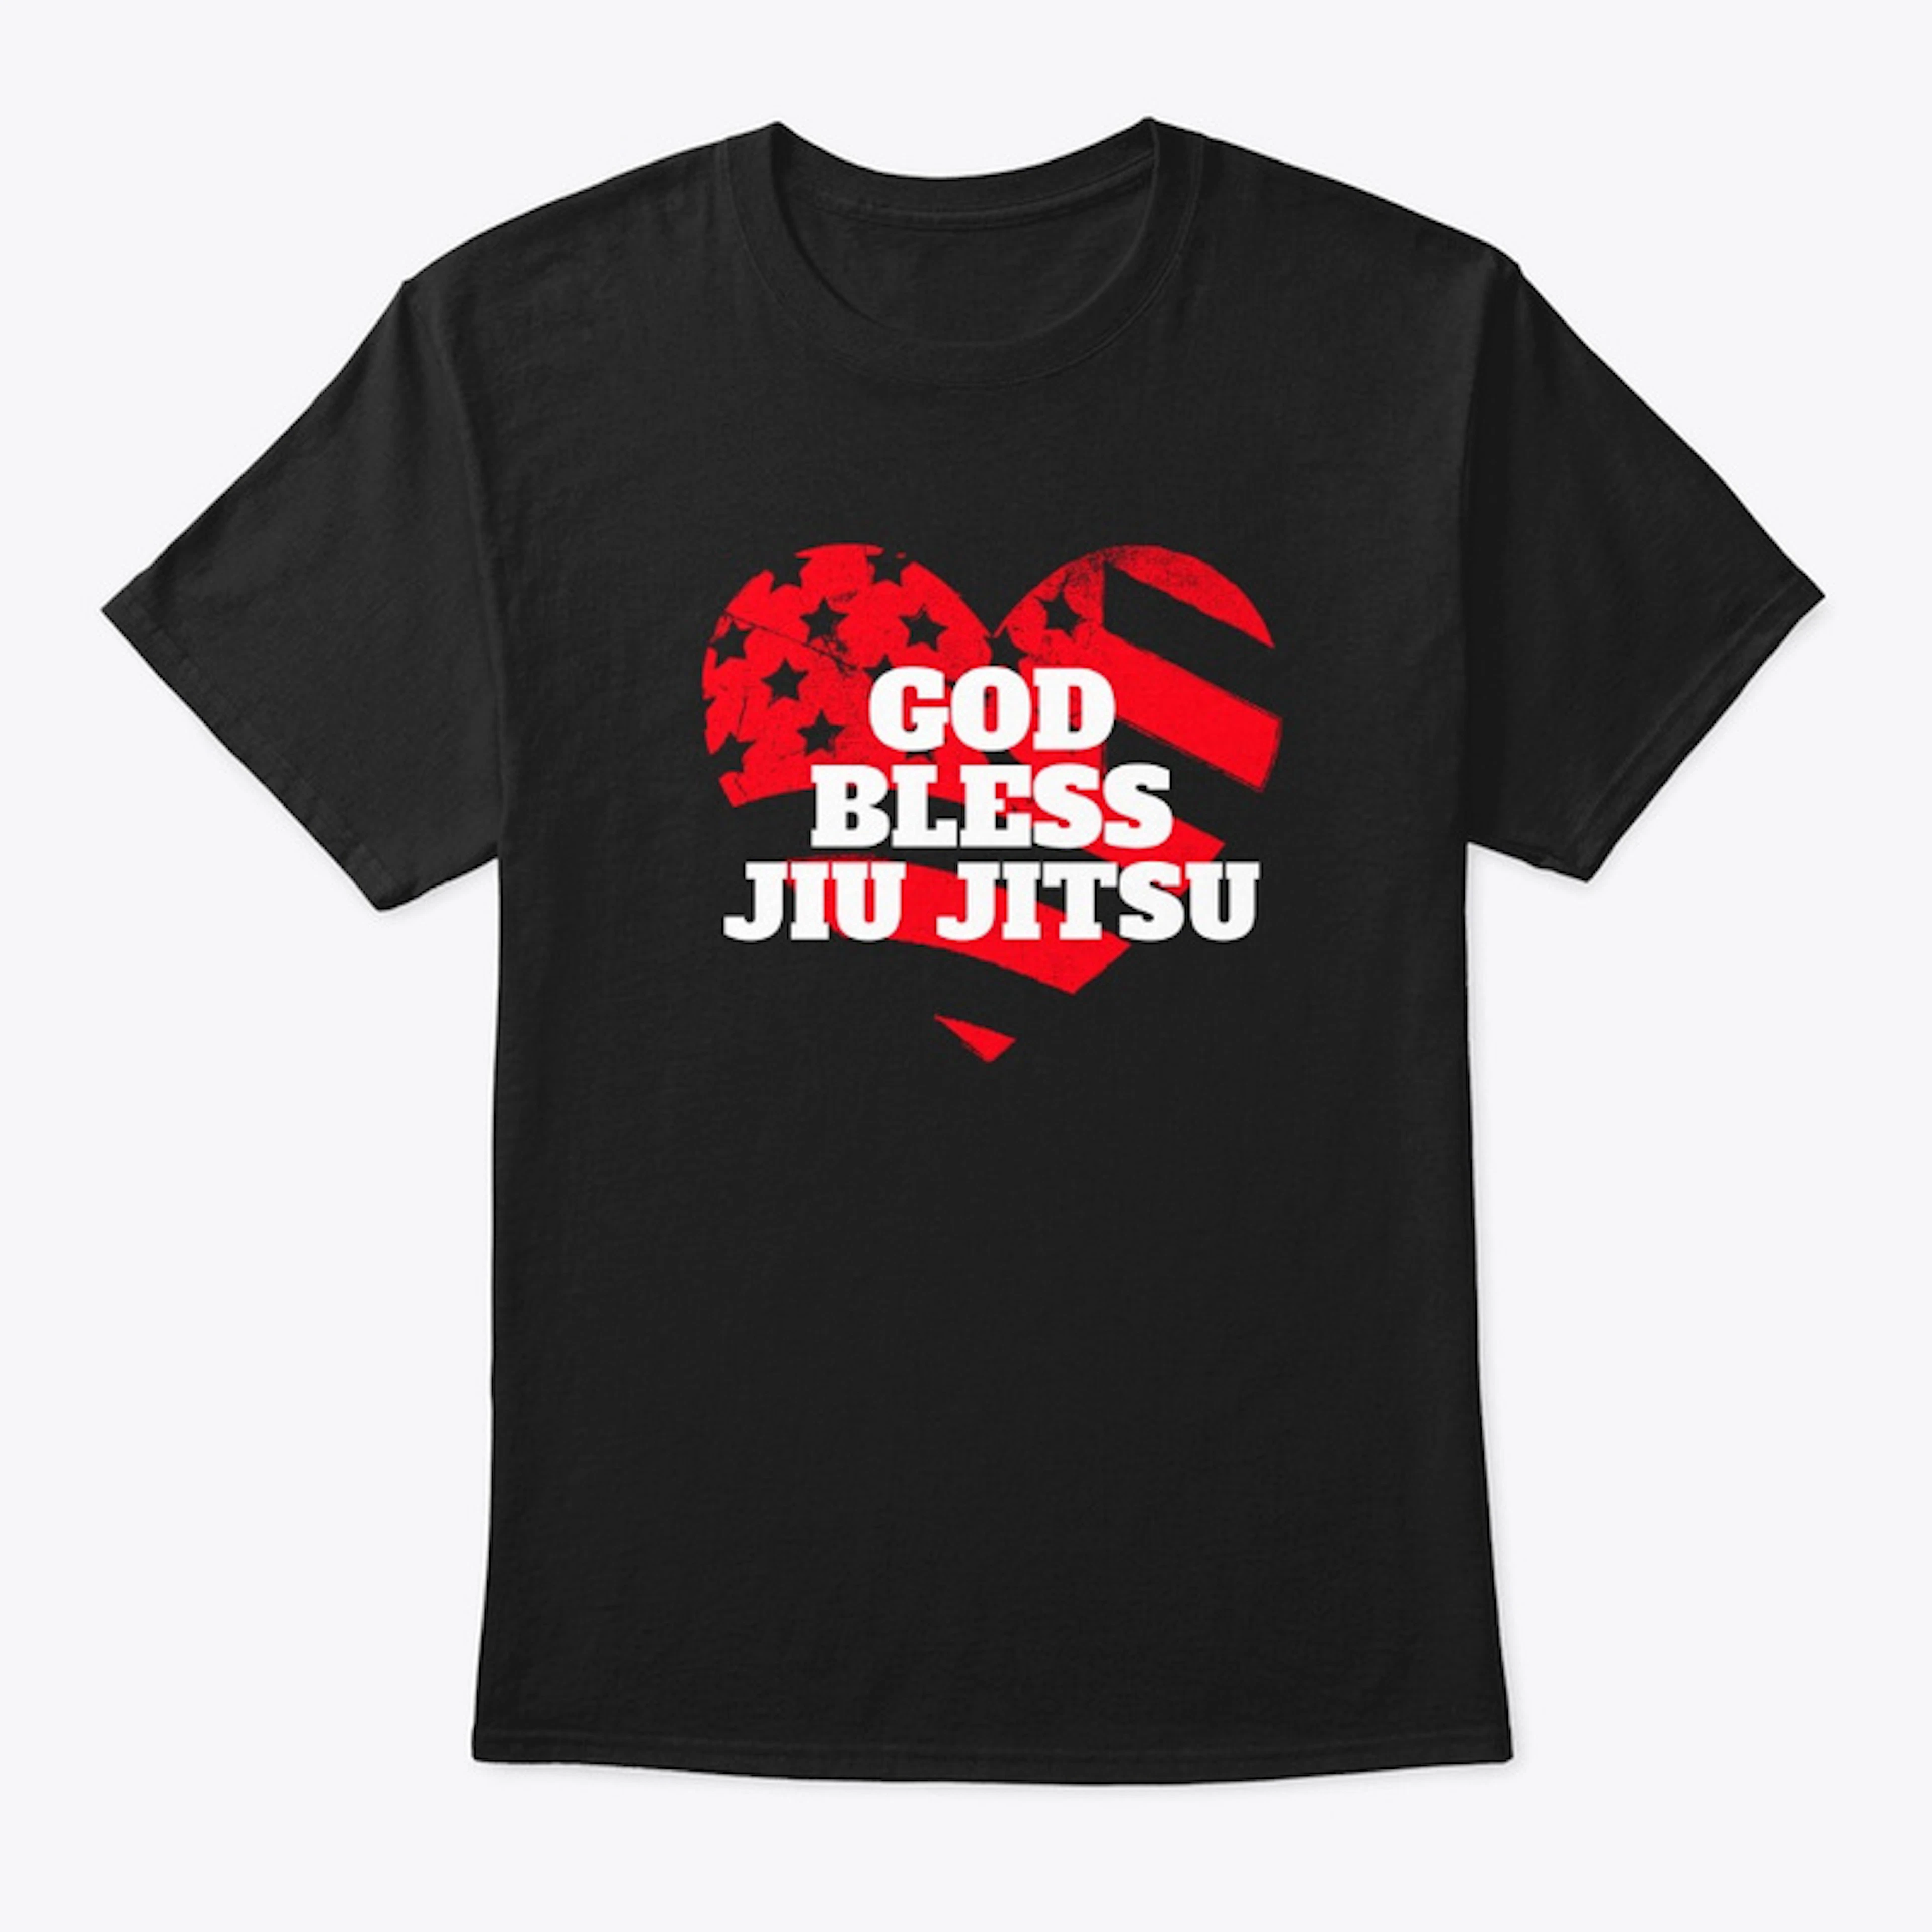 God bless Jiu Jitsu